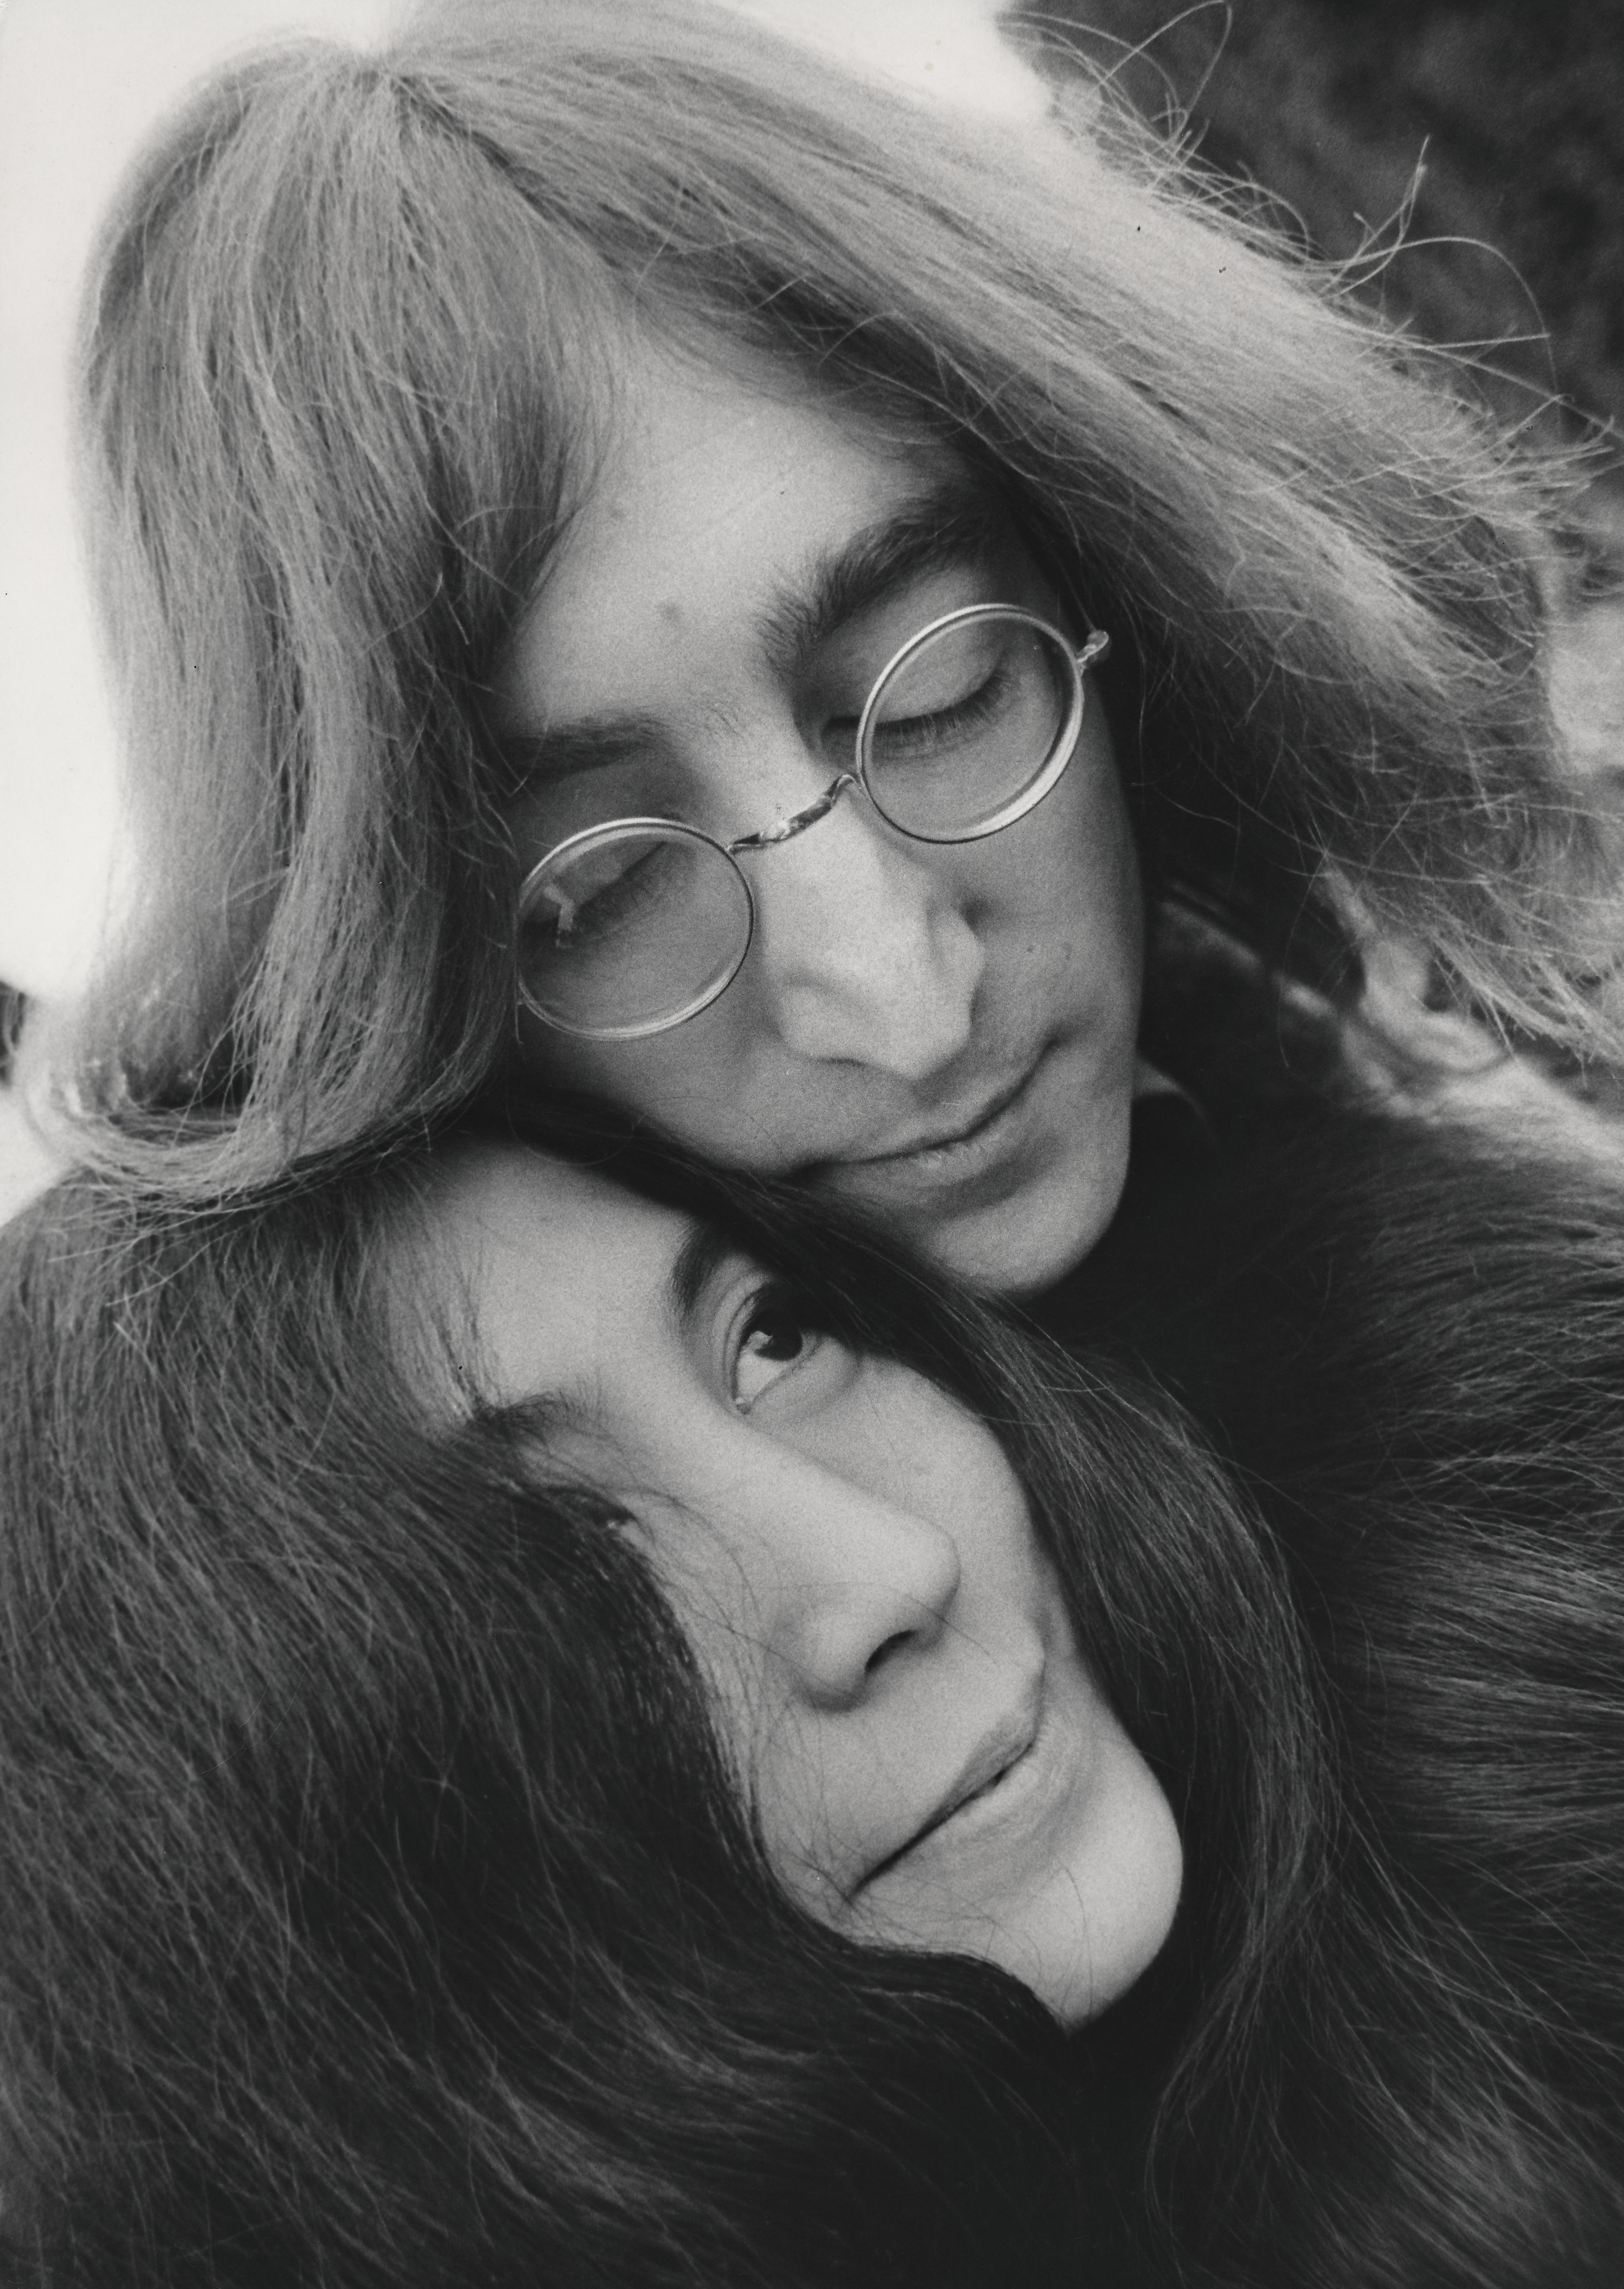 Вдова леннона. Джон Леннон и Йоко. Жена Джона Леннона Йоко. Леннон и Йоко оно. Джон Леннон Леннон и Йоко оно.